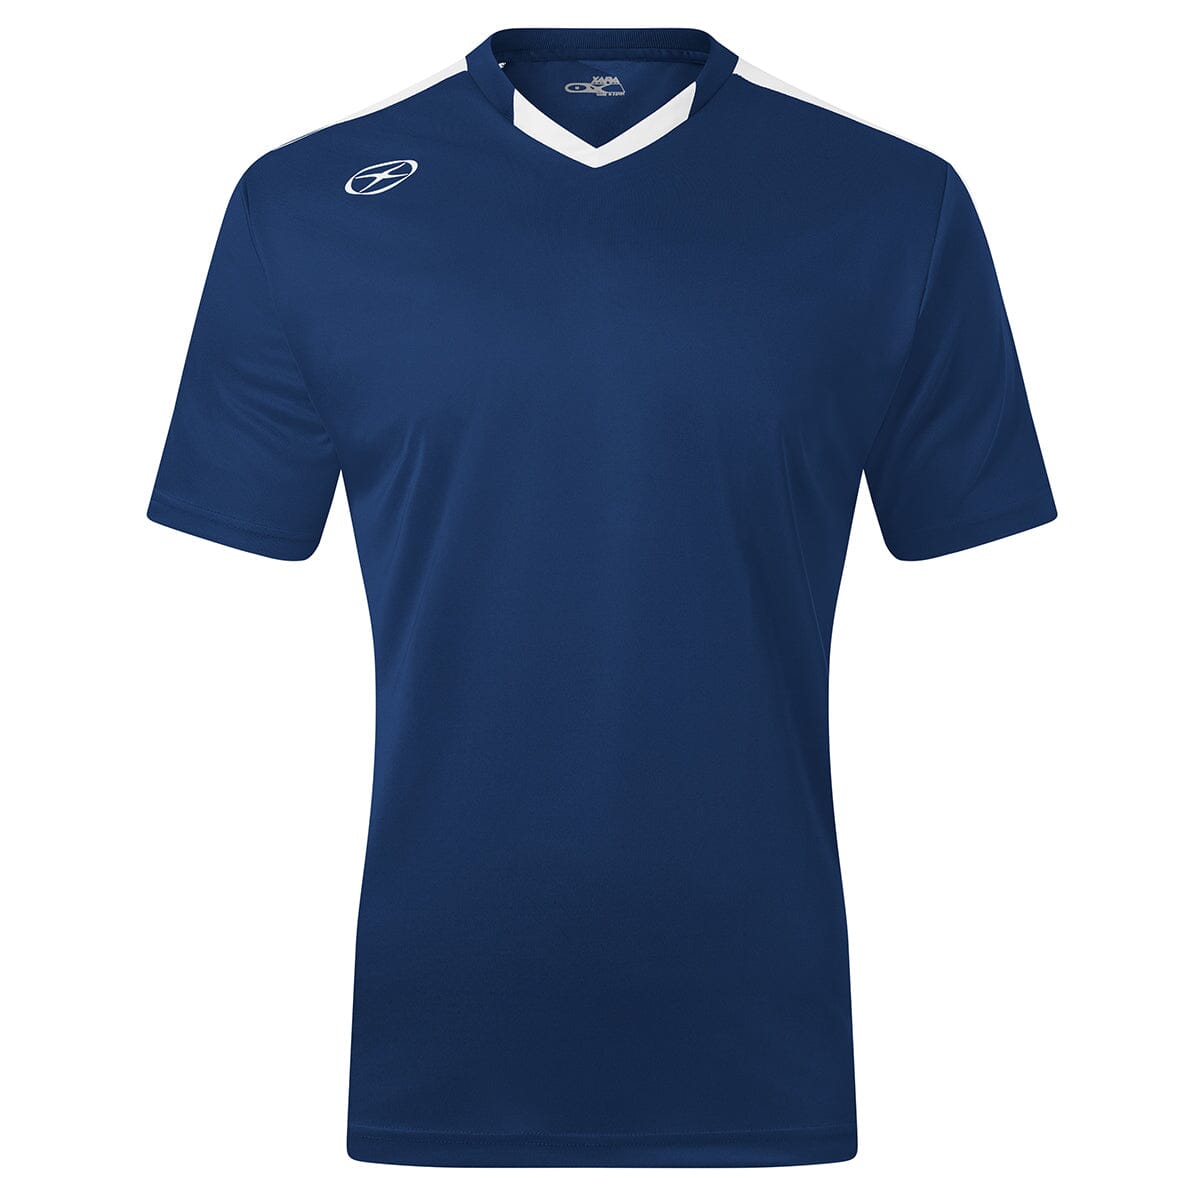 Britannia Jersey - Home Colors - Male Shirt Xara Soccer Navy/White Large 